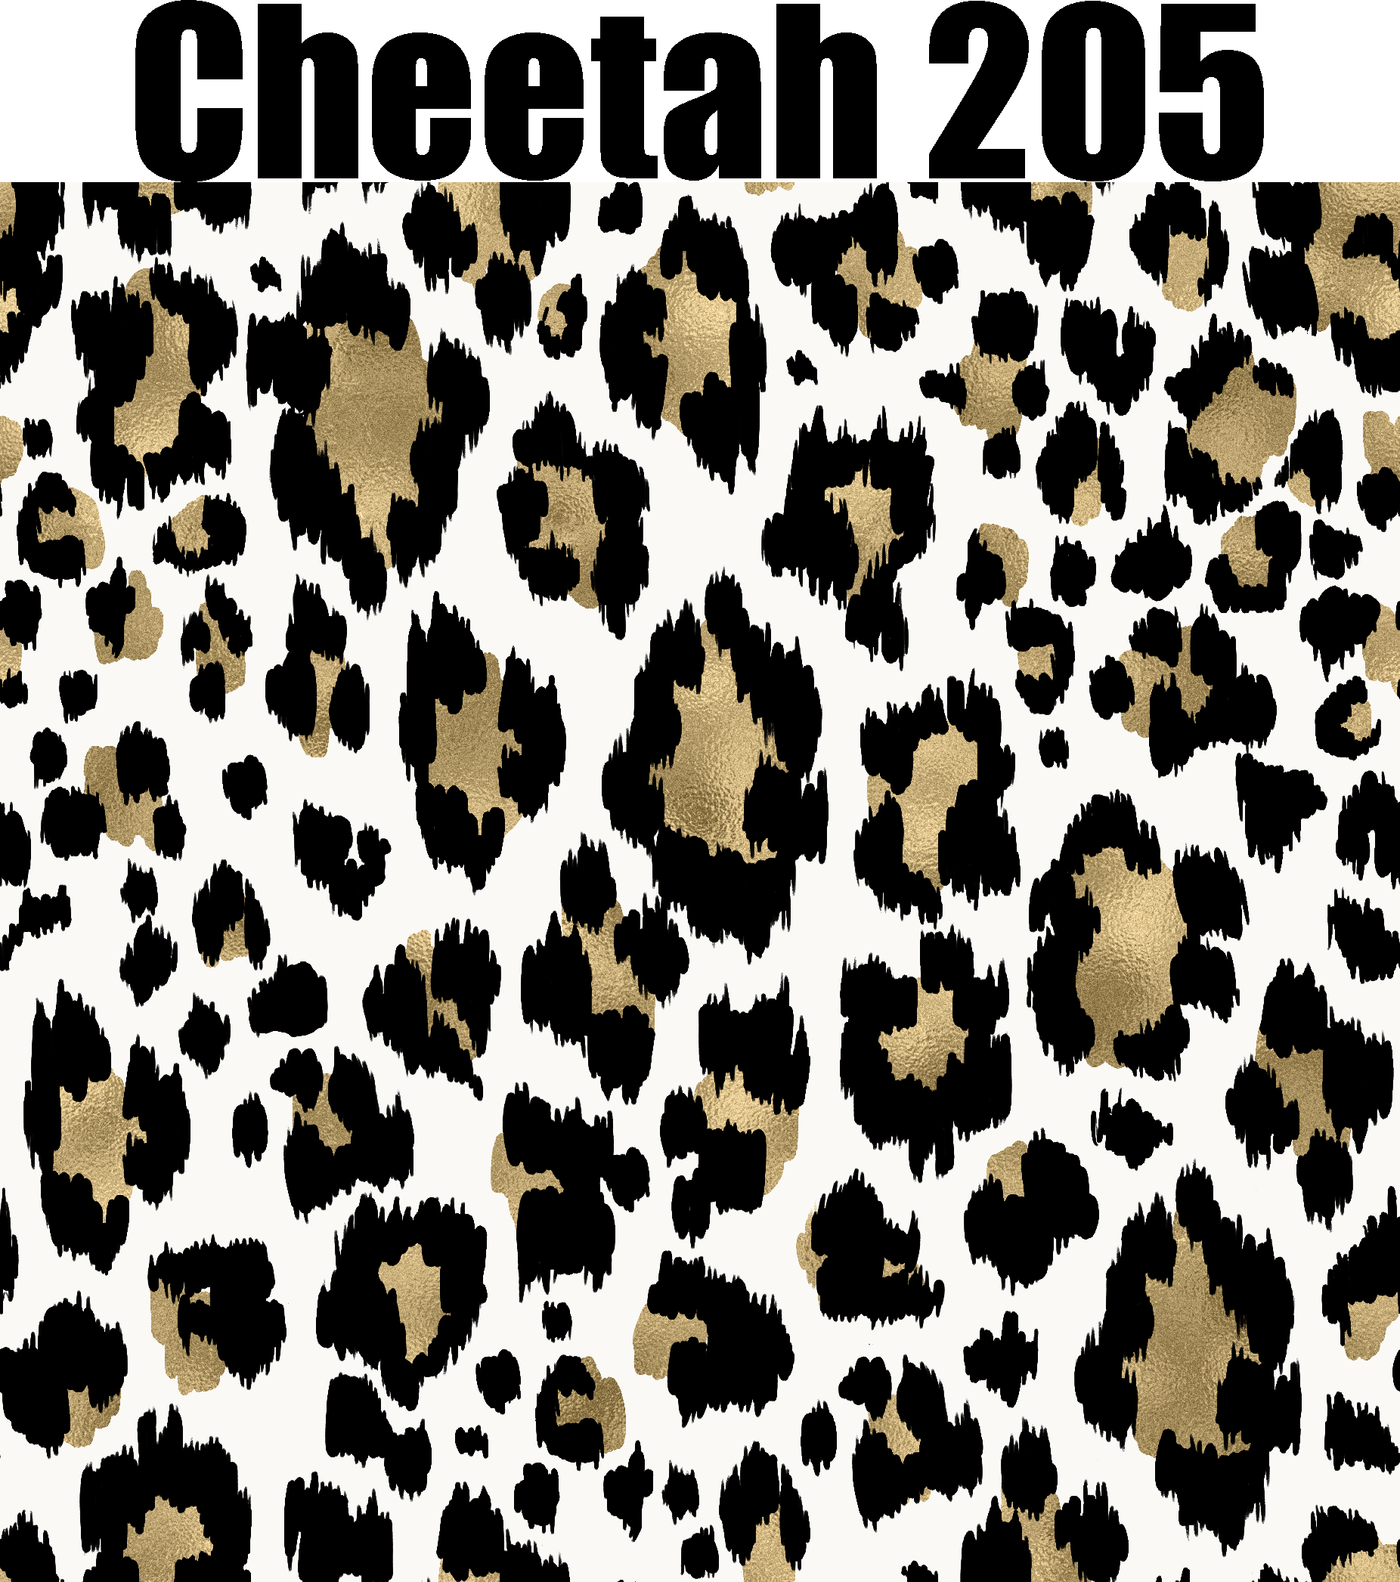 Adhesive Patterned Vinyl - Cheetah 205